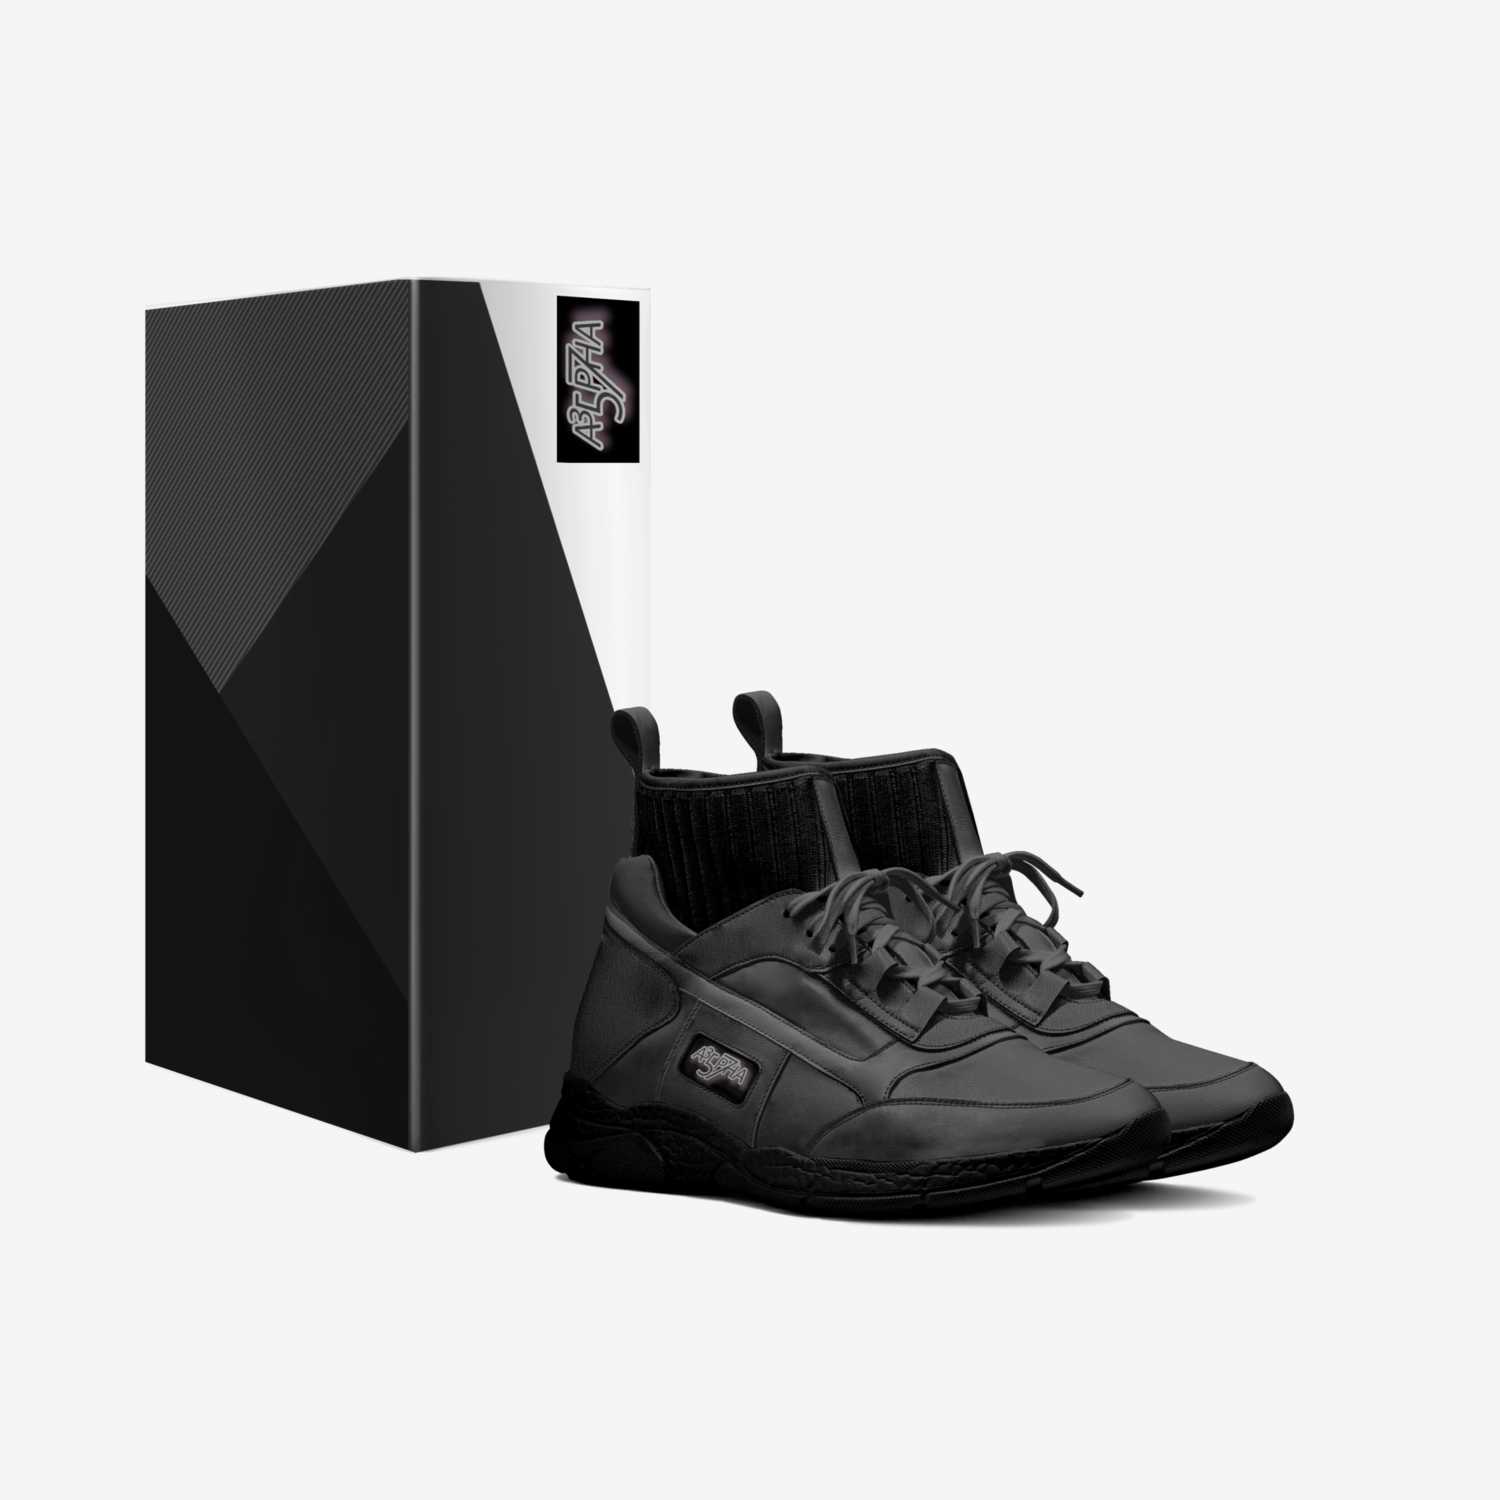 Alpha Trek custom made in Italy shoes by Aldric Horton Jr | Box view